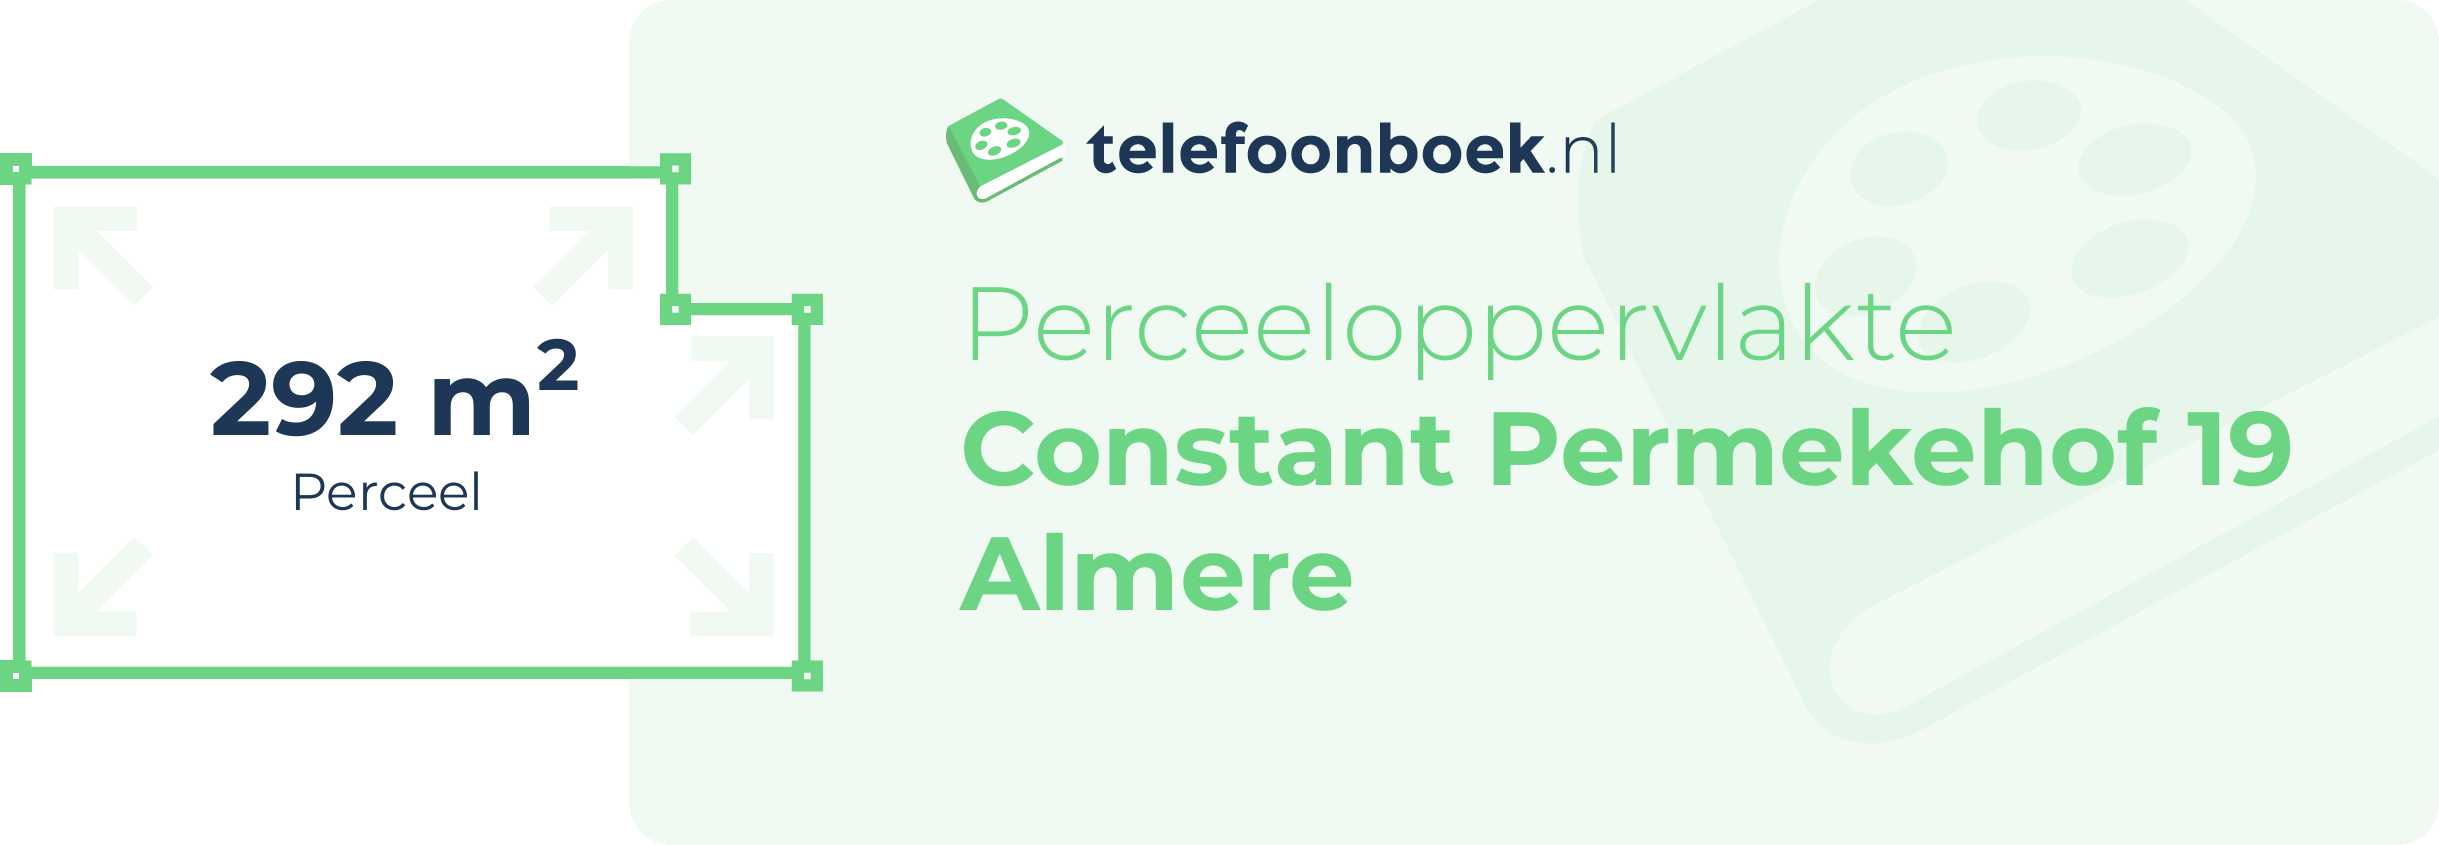 Perceeloppervlakte Constant Permekehof 19 Almere